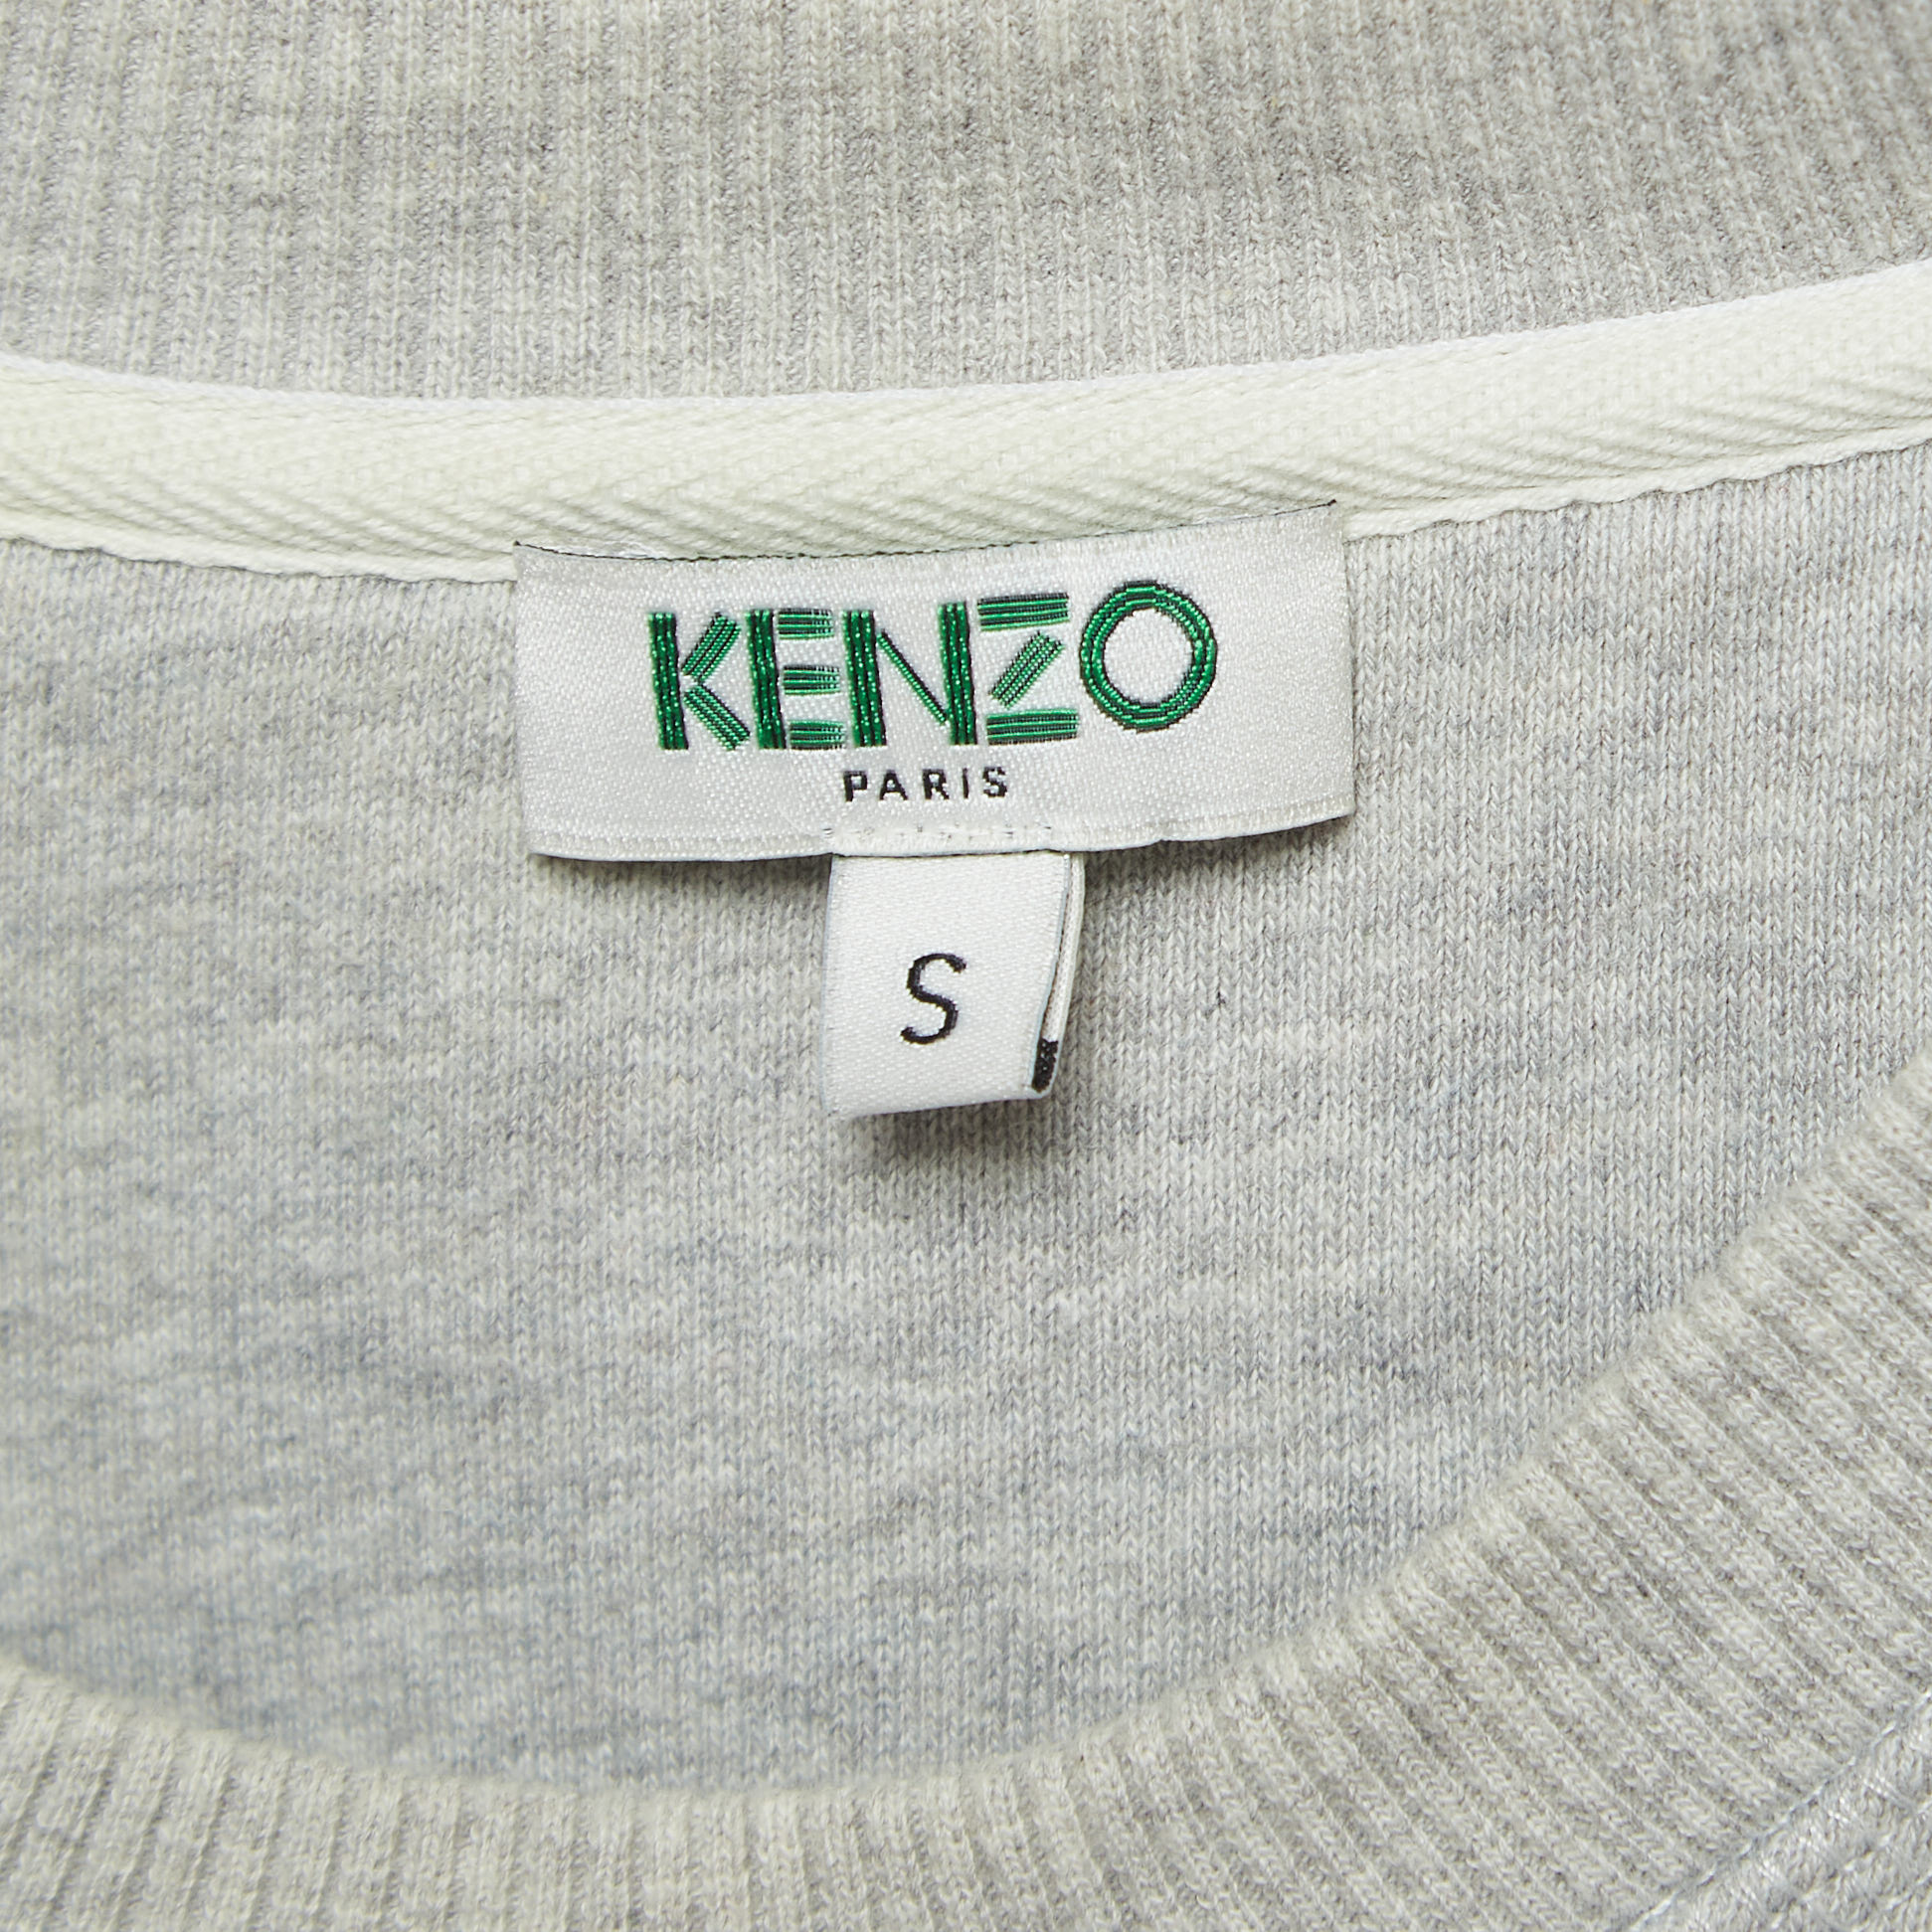 Kenzo Grey Logo Embroidered Cotton Crew Neck Sweatshirt S